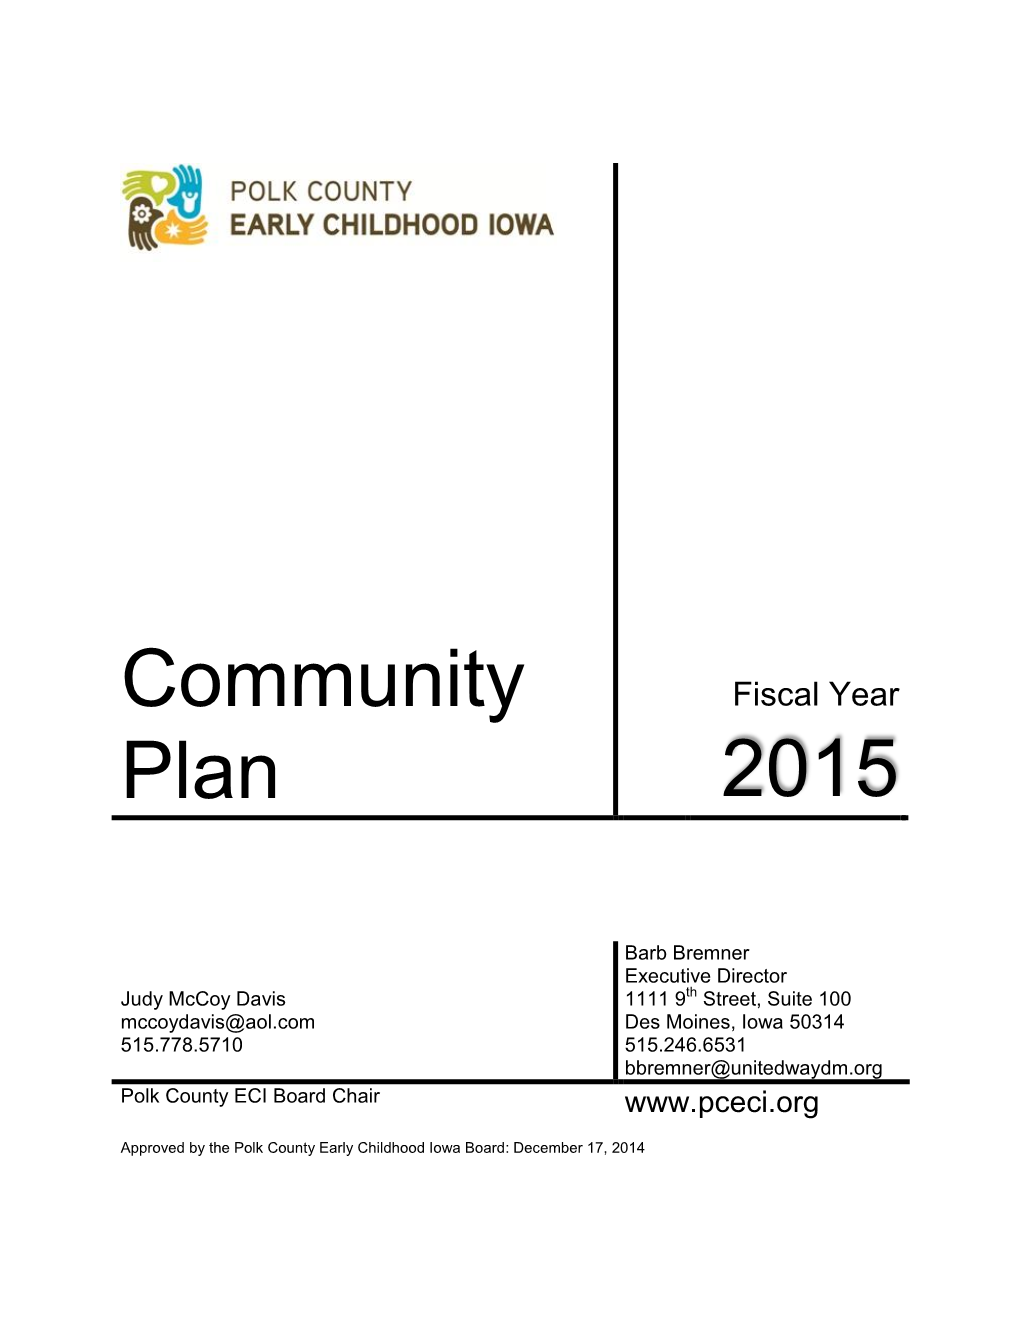 Community Plan 2015 Will Be Shared with All Polk County Legislators